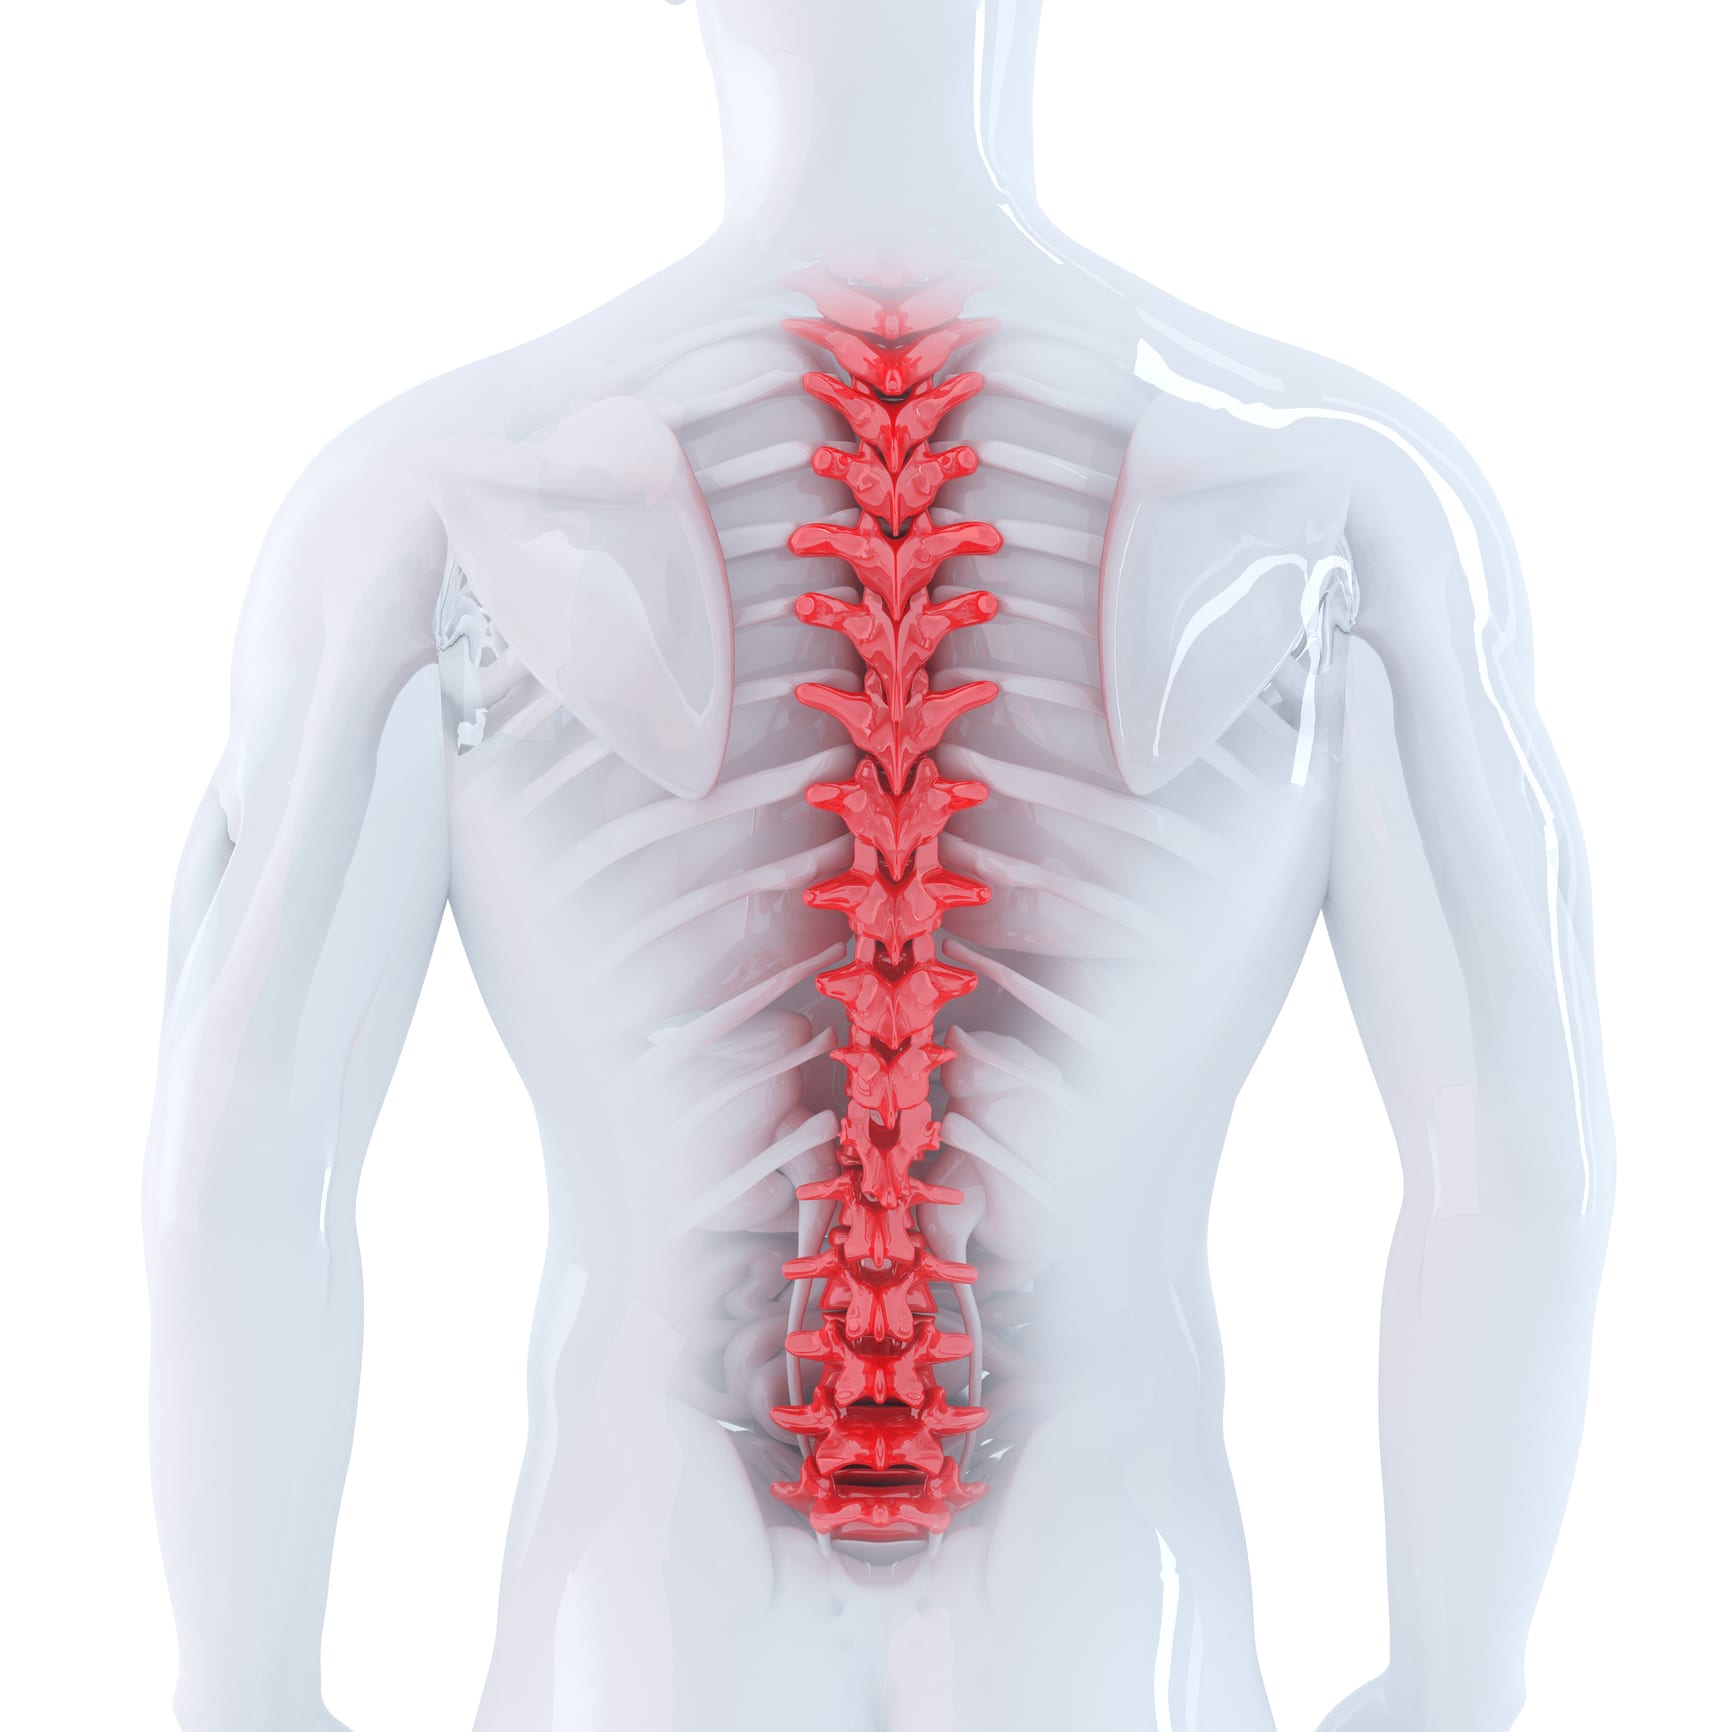 thoracic-spine-anatomy-poster-anatomy-bones-human-spine-anatomy-porn